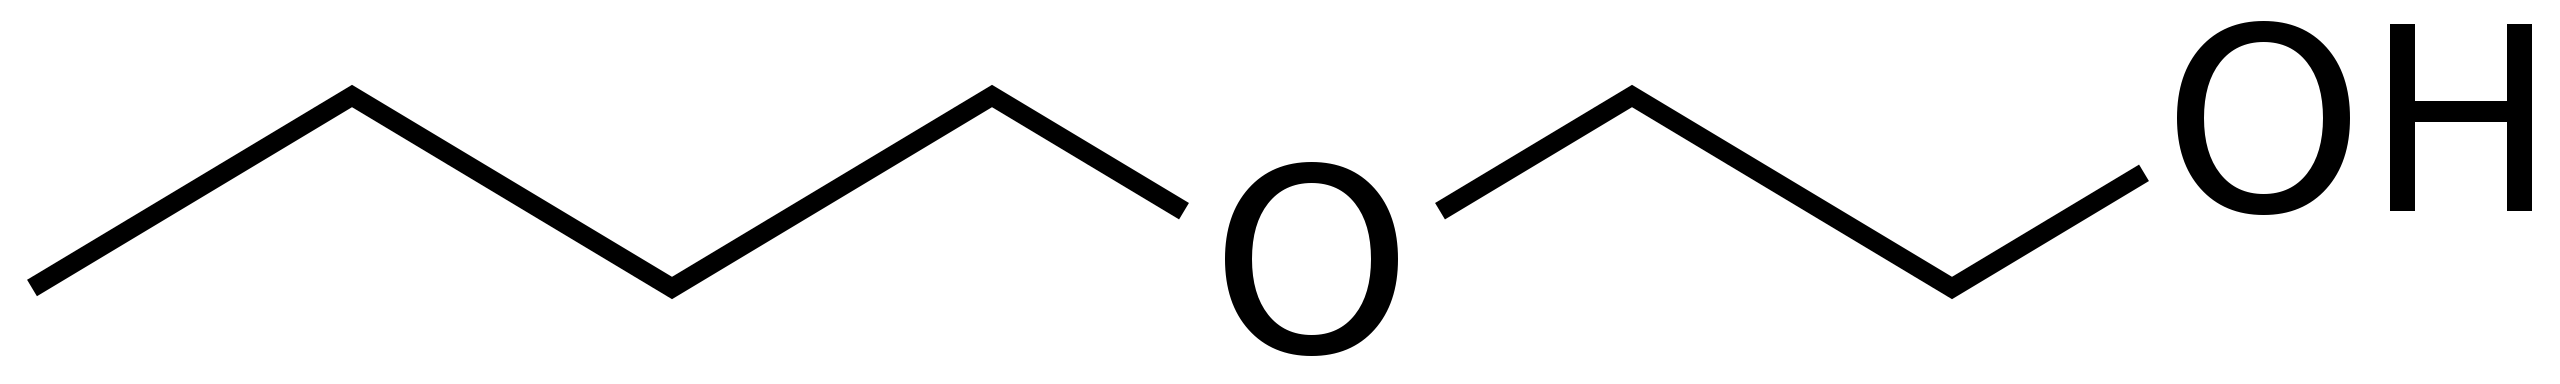 <p>Structure of 2-Butoxyethanol